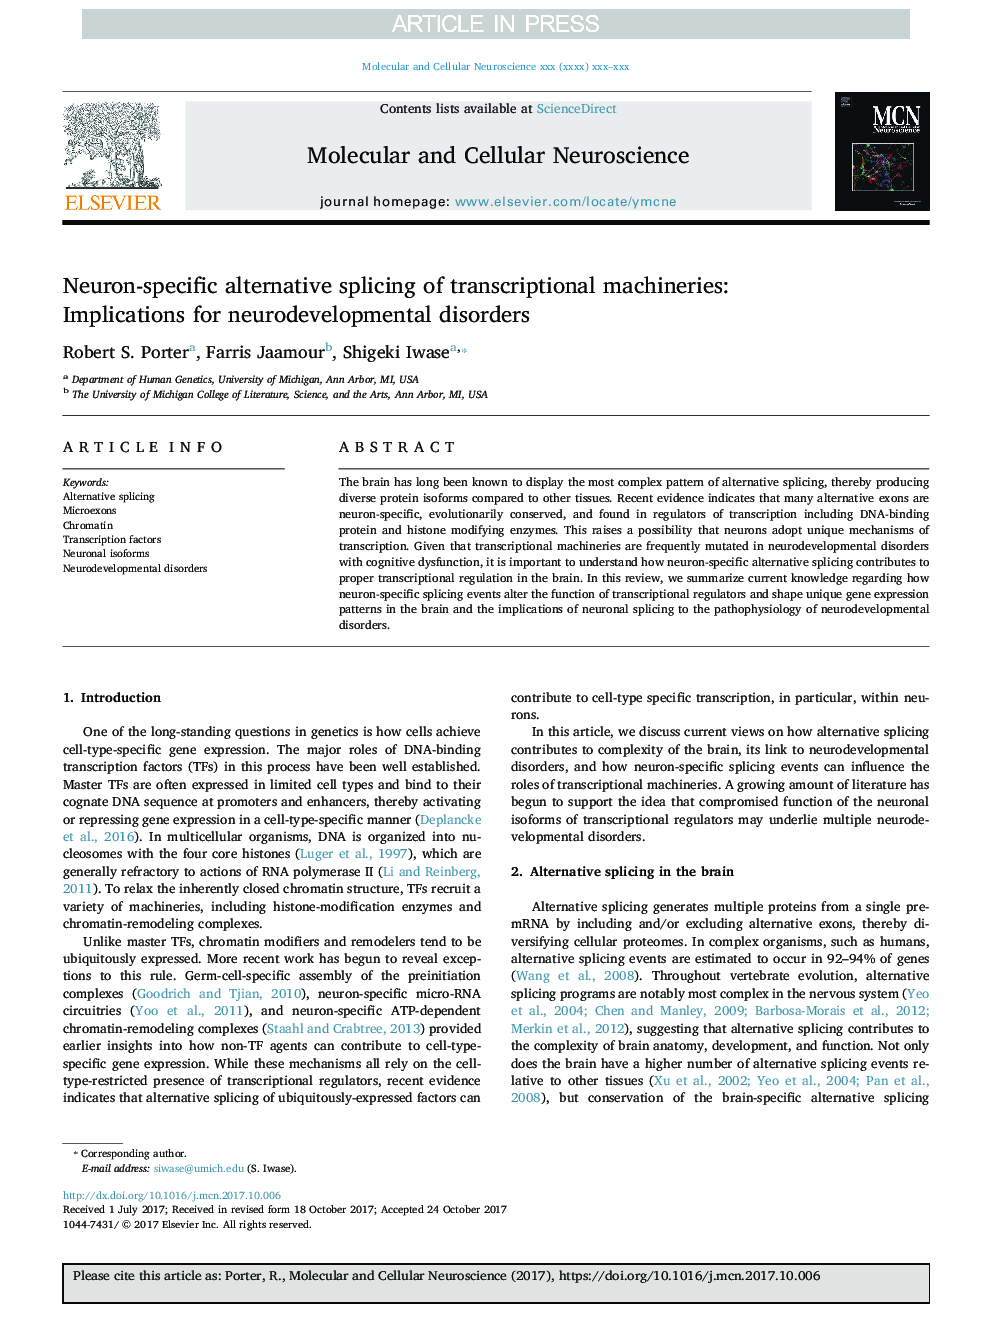 Neuron-specific alternative splicing of transcriptional machineries: Implications for neurodevelopmental disorders